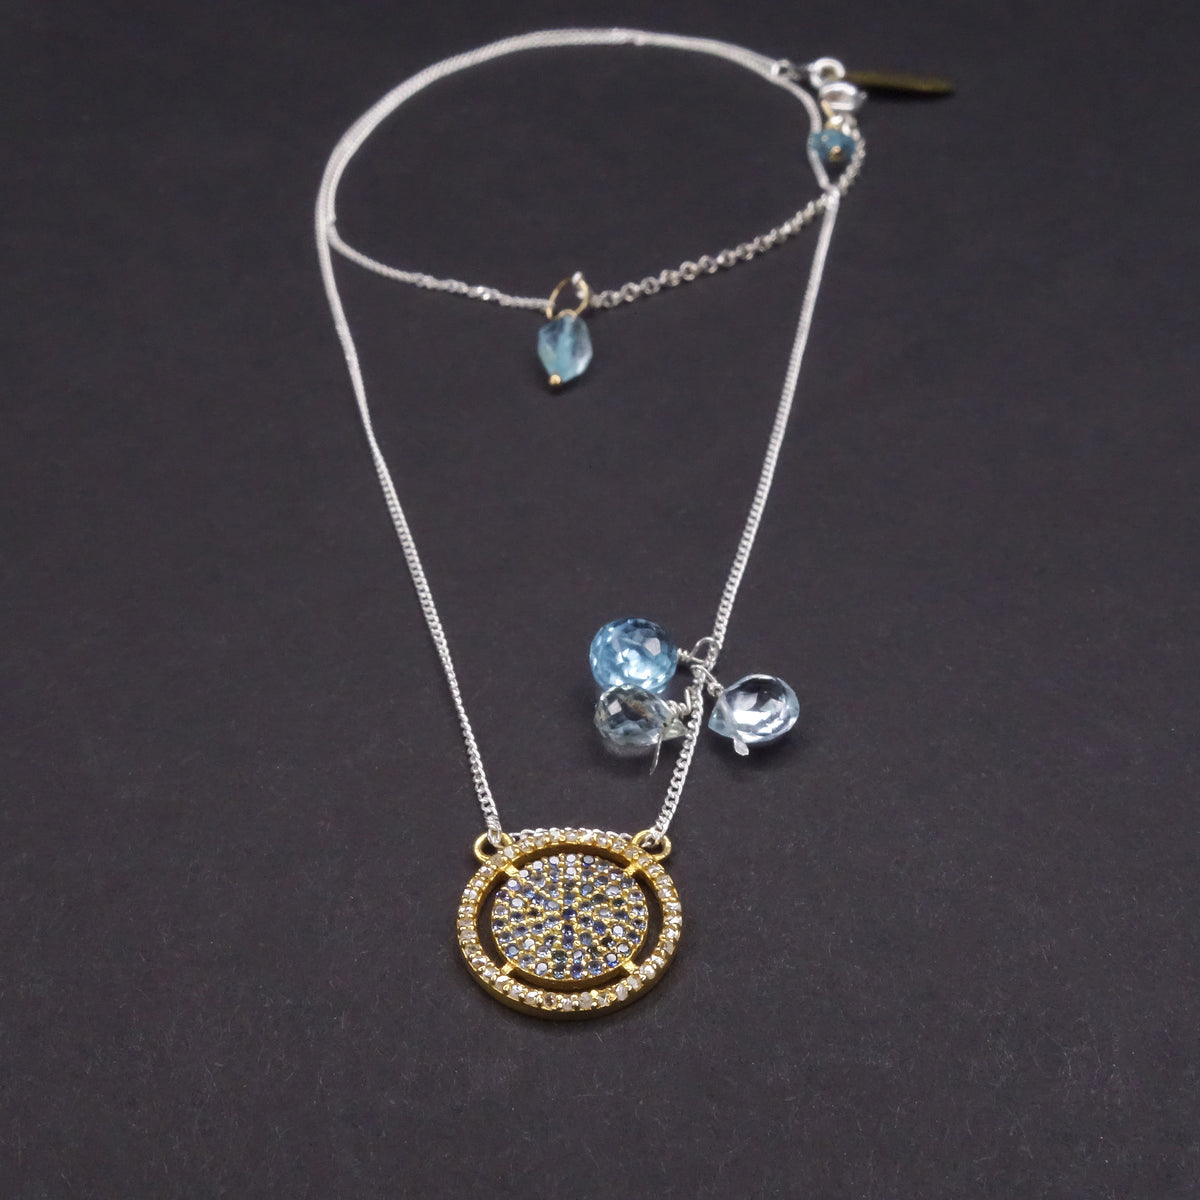 She Sparkled through the Rain: diamond + aquamarine necklace